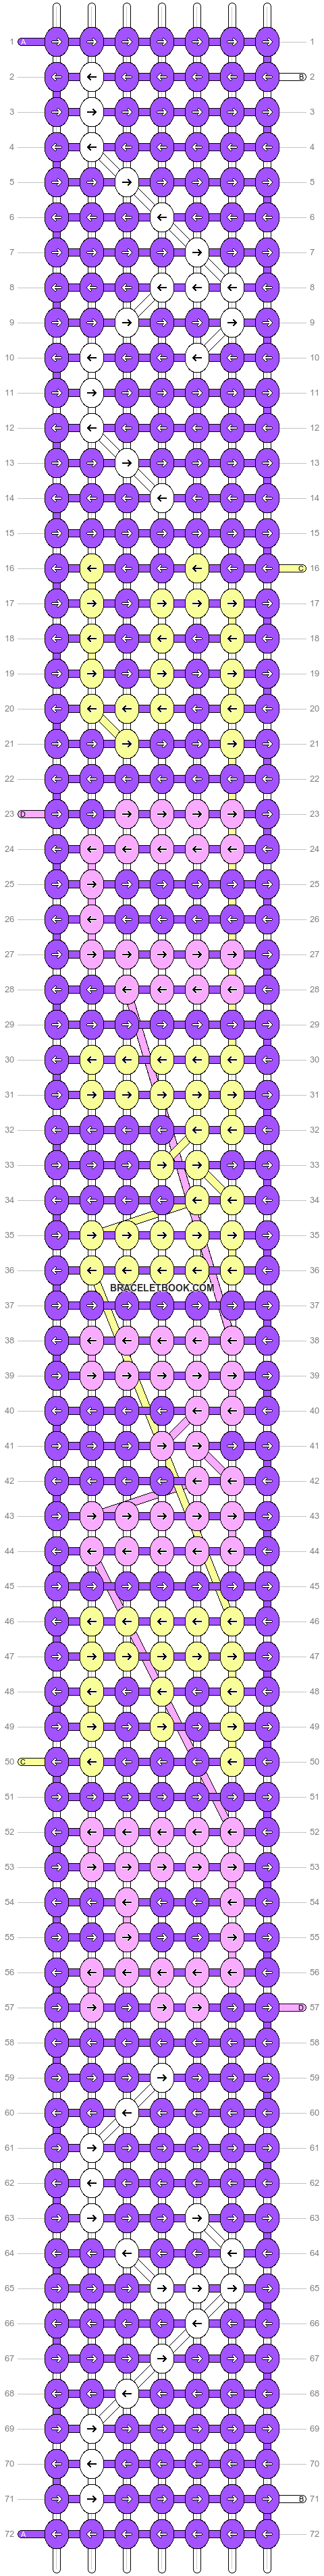 Alpha pattern #51088 pattern